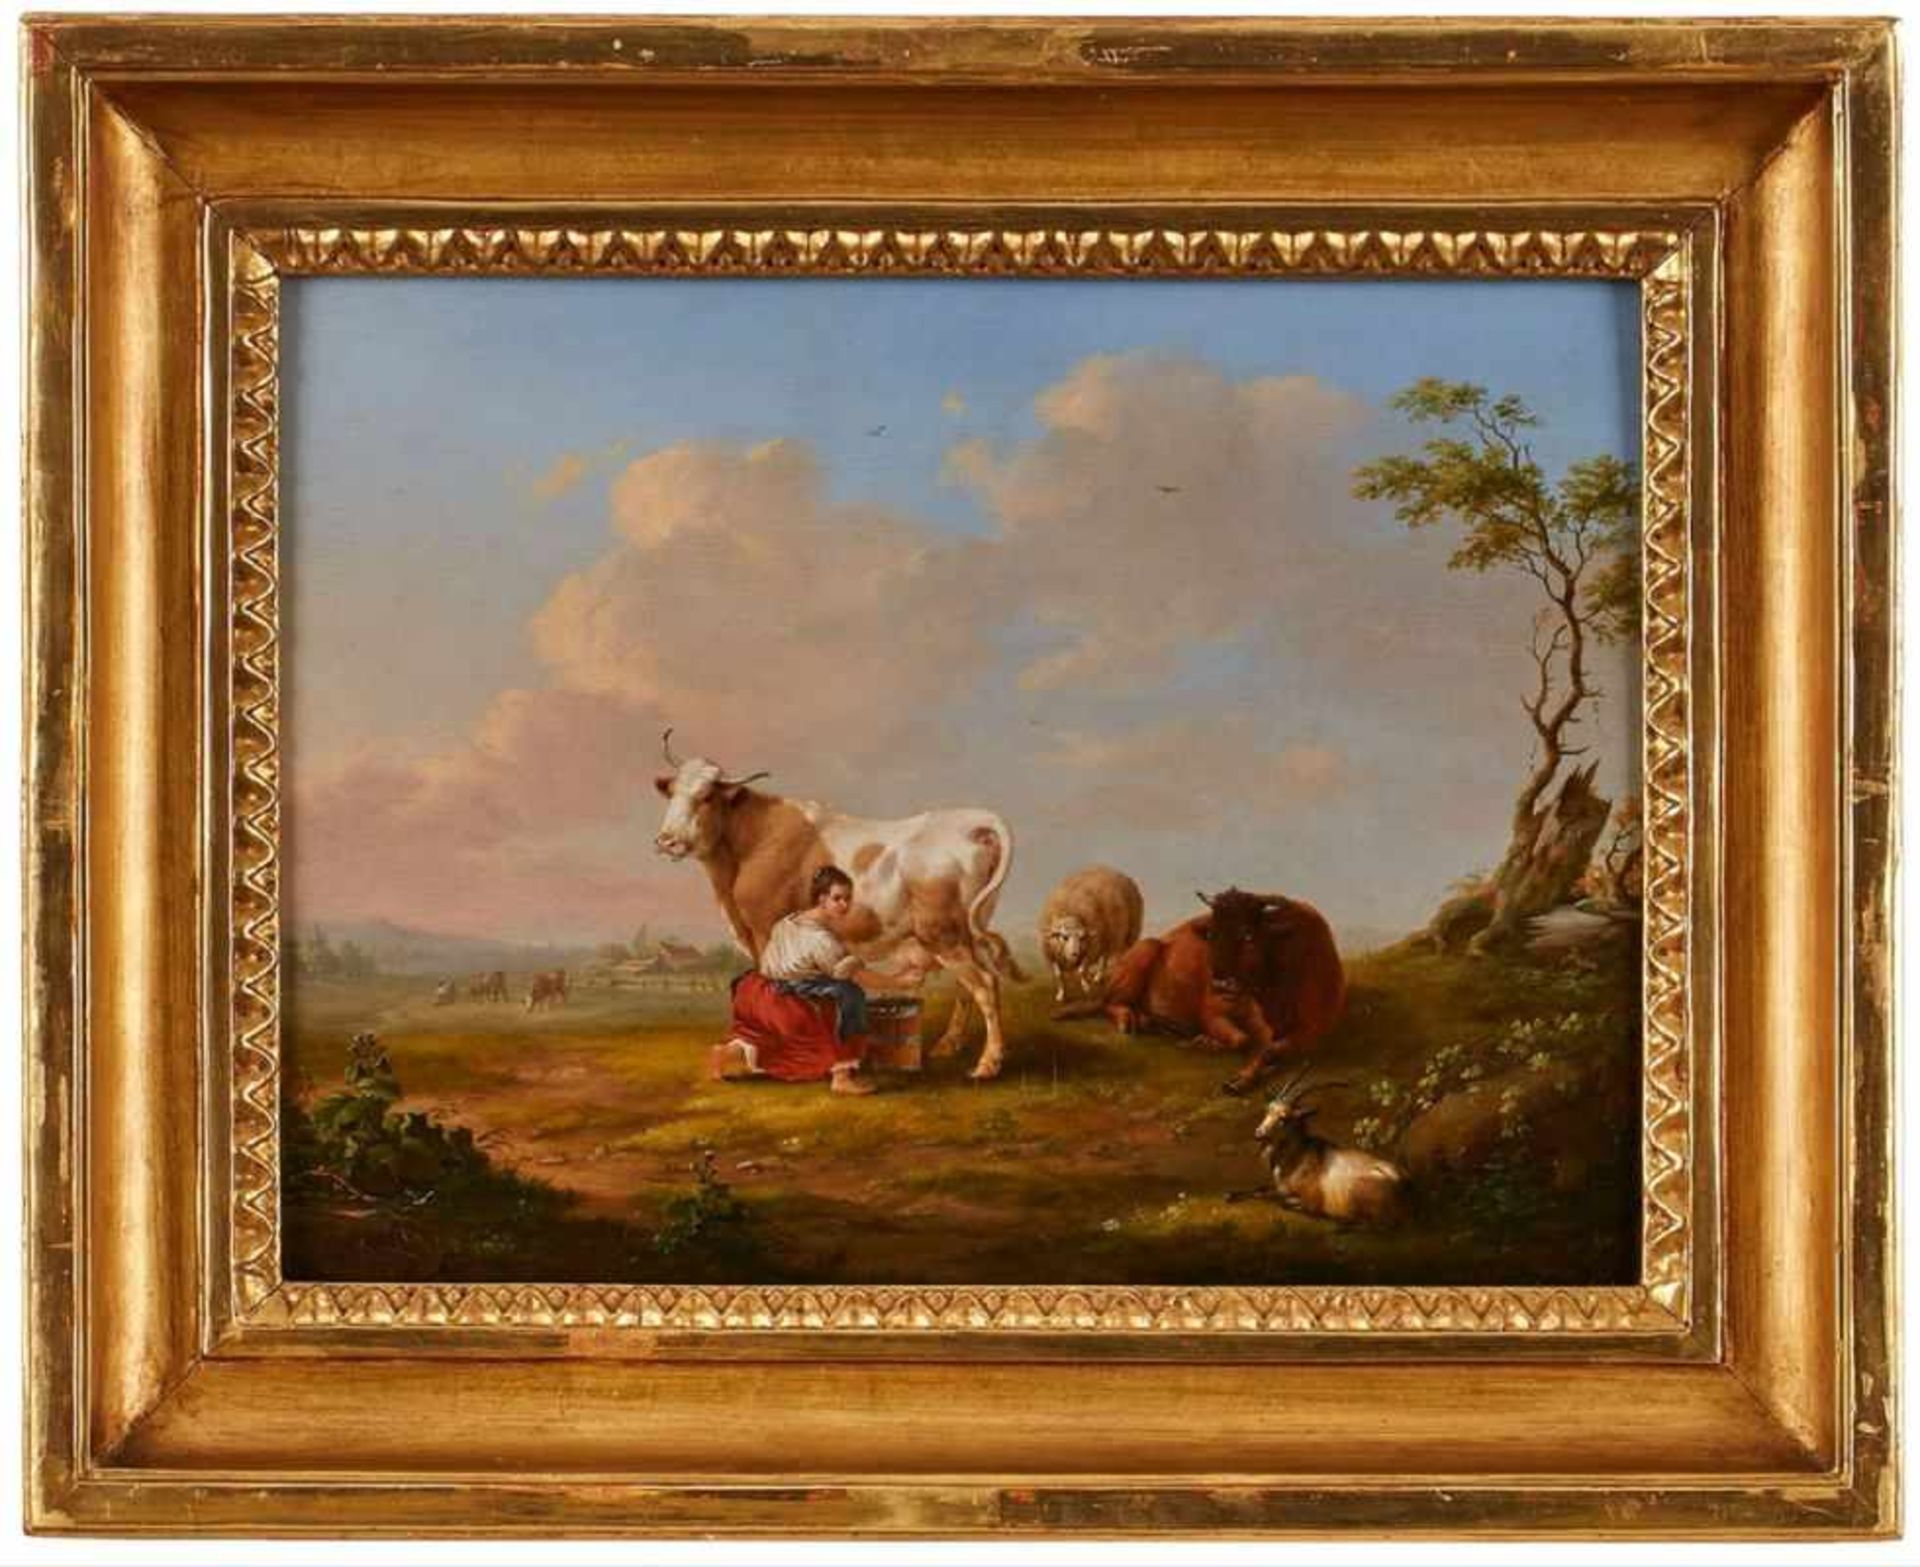 Gemälde Johann Georg Pforr1745 Ulfen - 1798 Frankfurt 1769 holt ihn Jakob Sigismund Waitz,